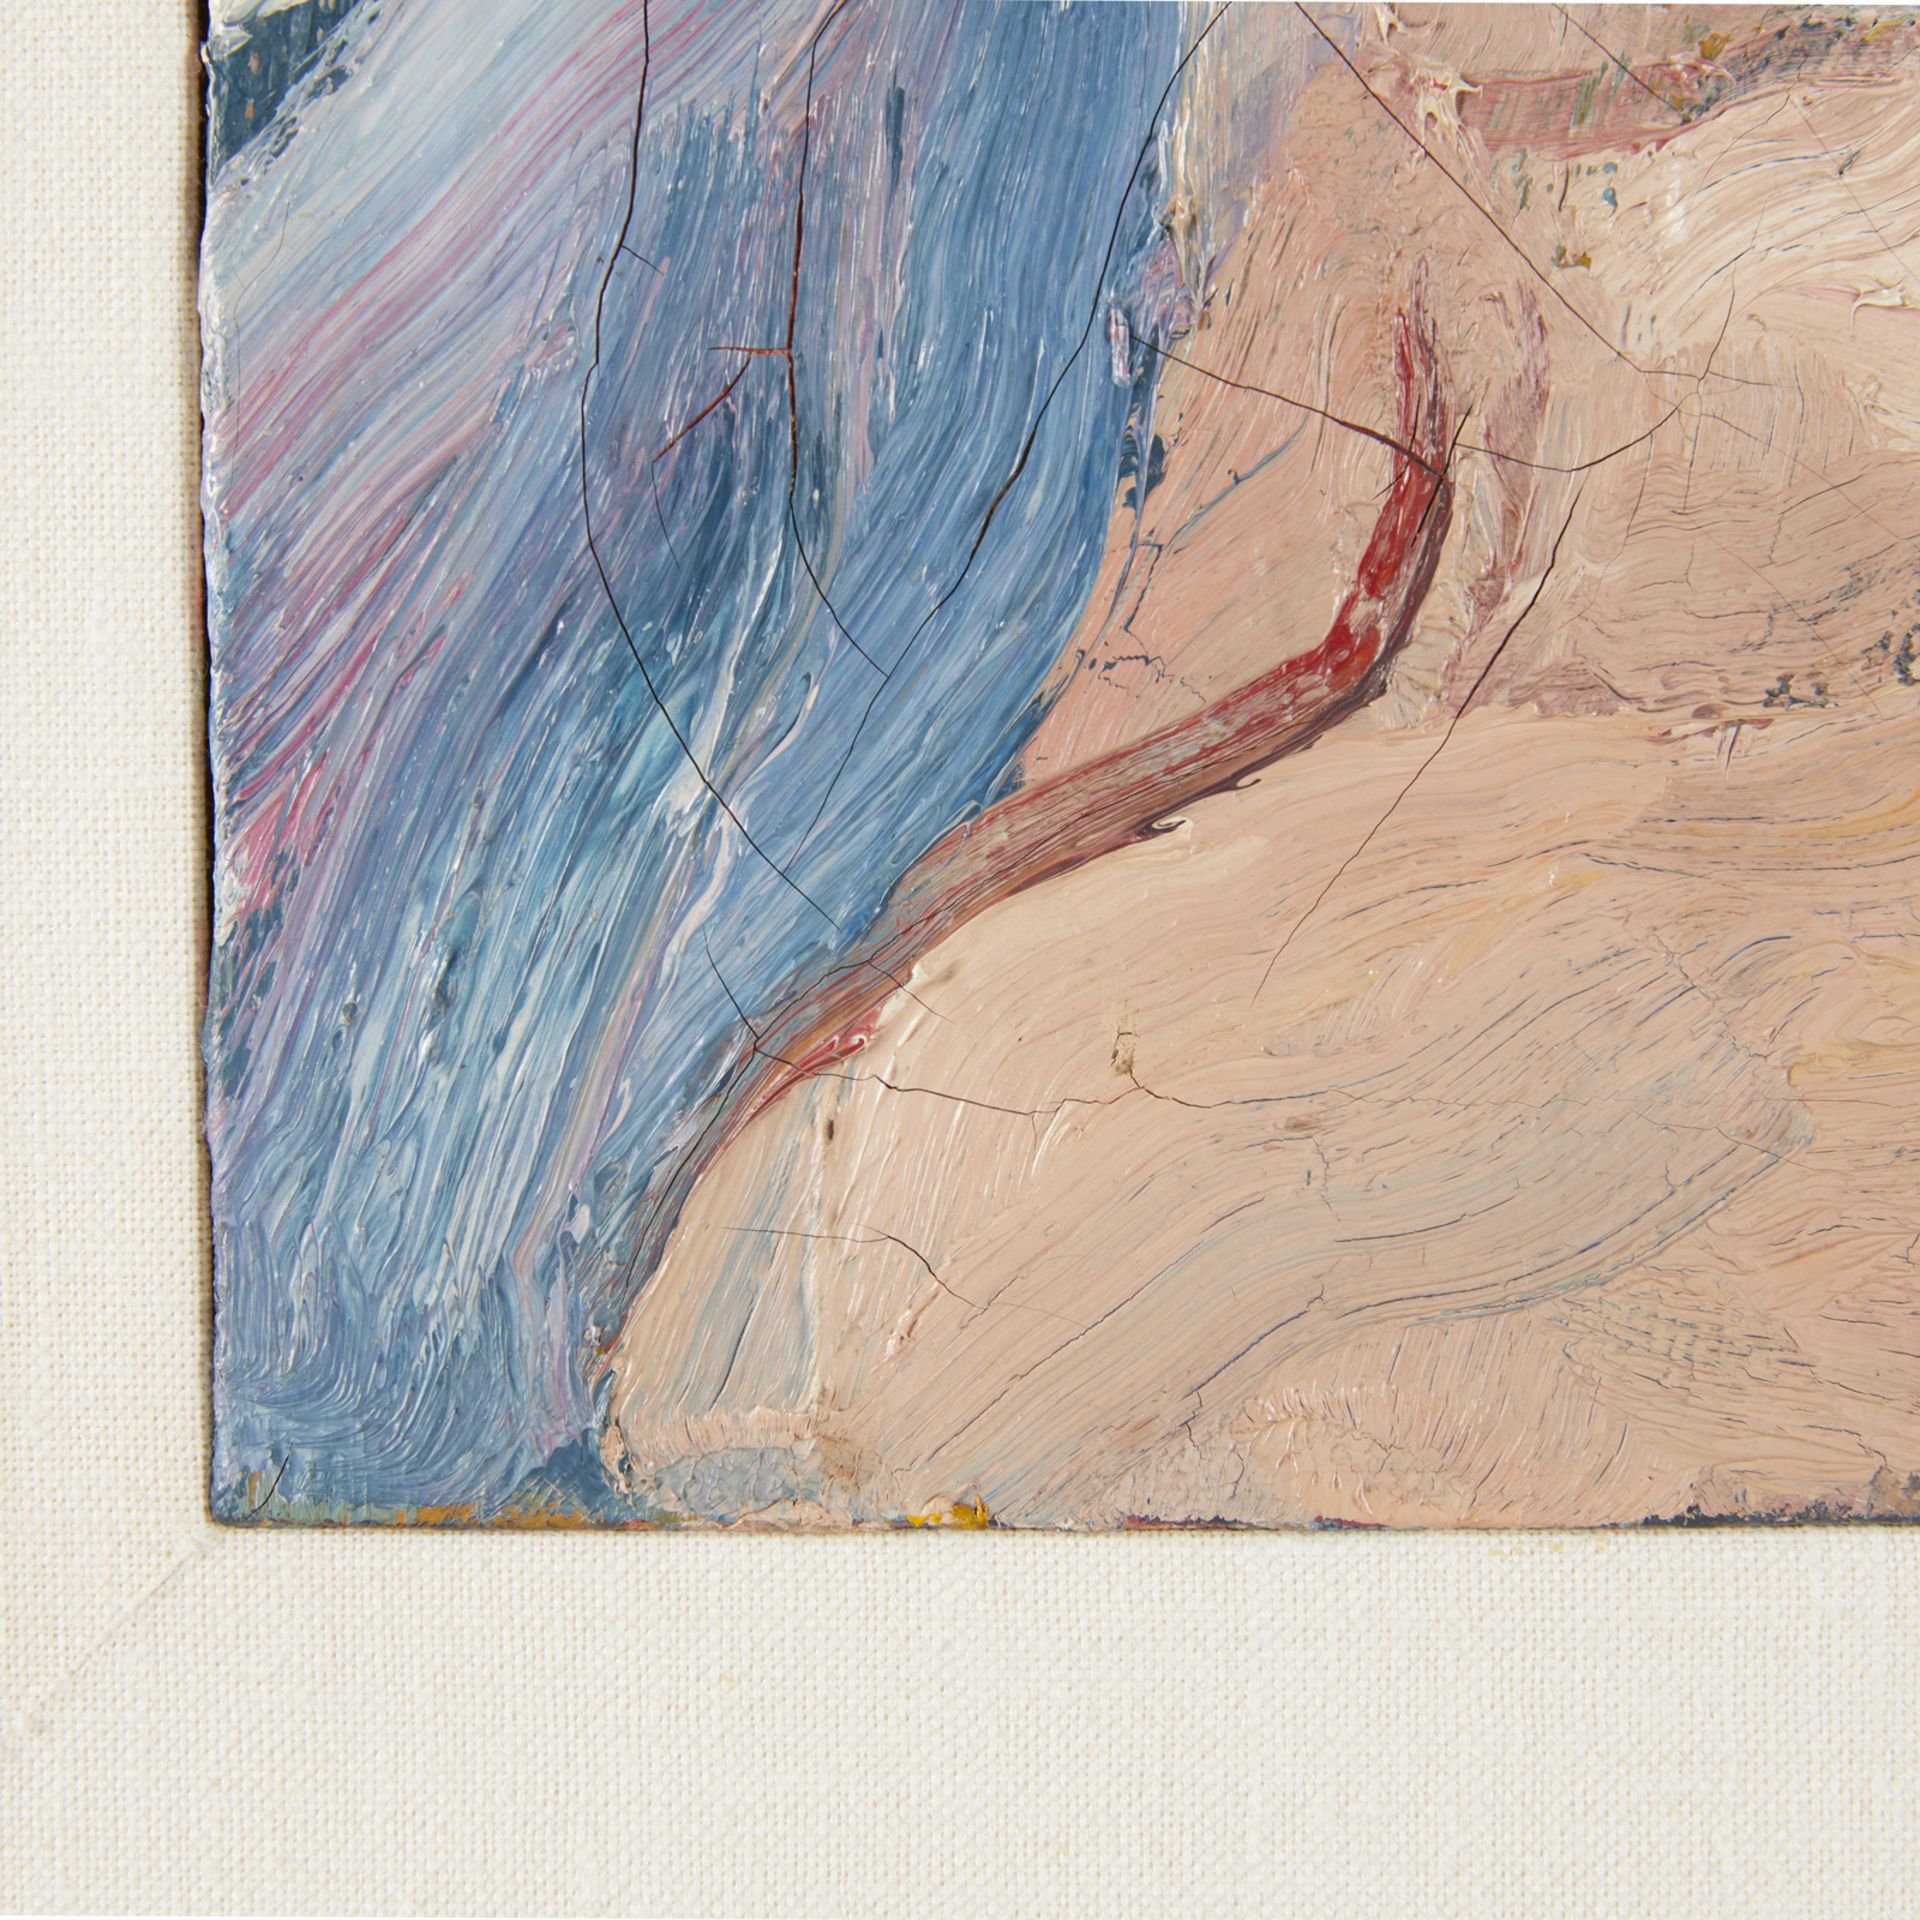 Richard Diebenkorn "Reclining Nude II" Painting - Image 5 of 13